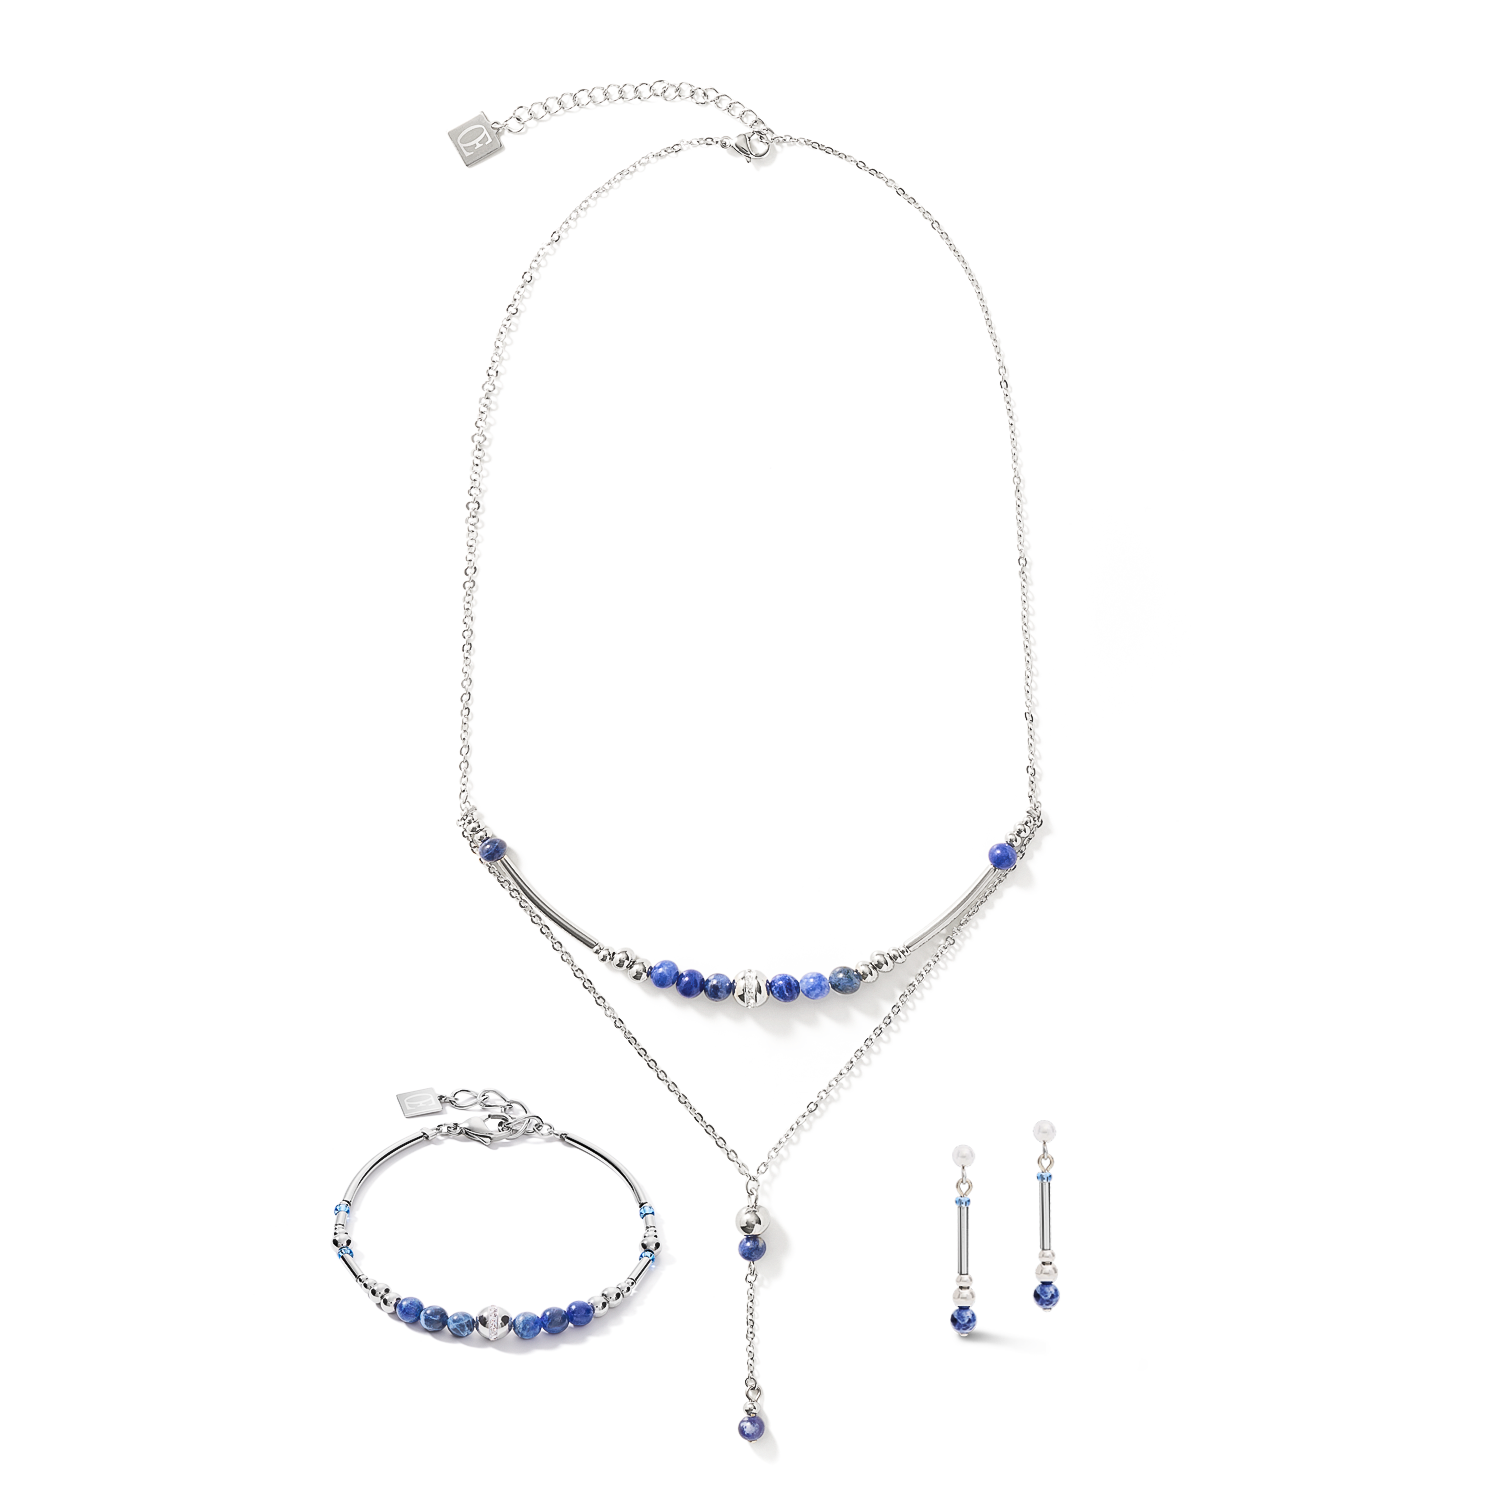 Ohrringe Y2 Sodalith Kugeln, Pavé-Kristalle & Edelstahl silber blau